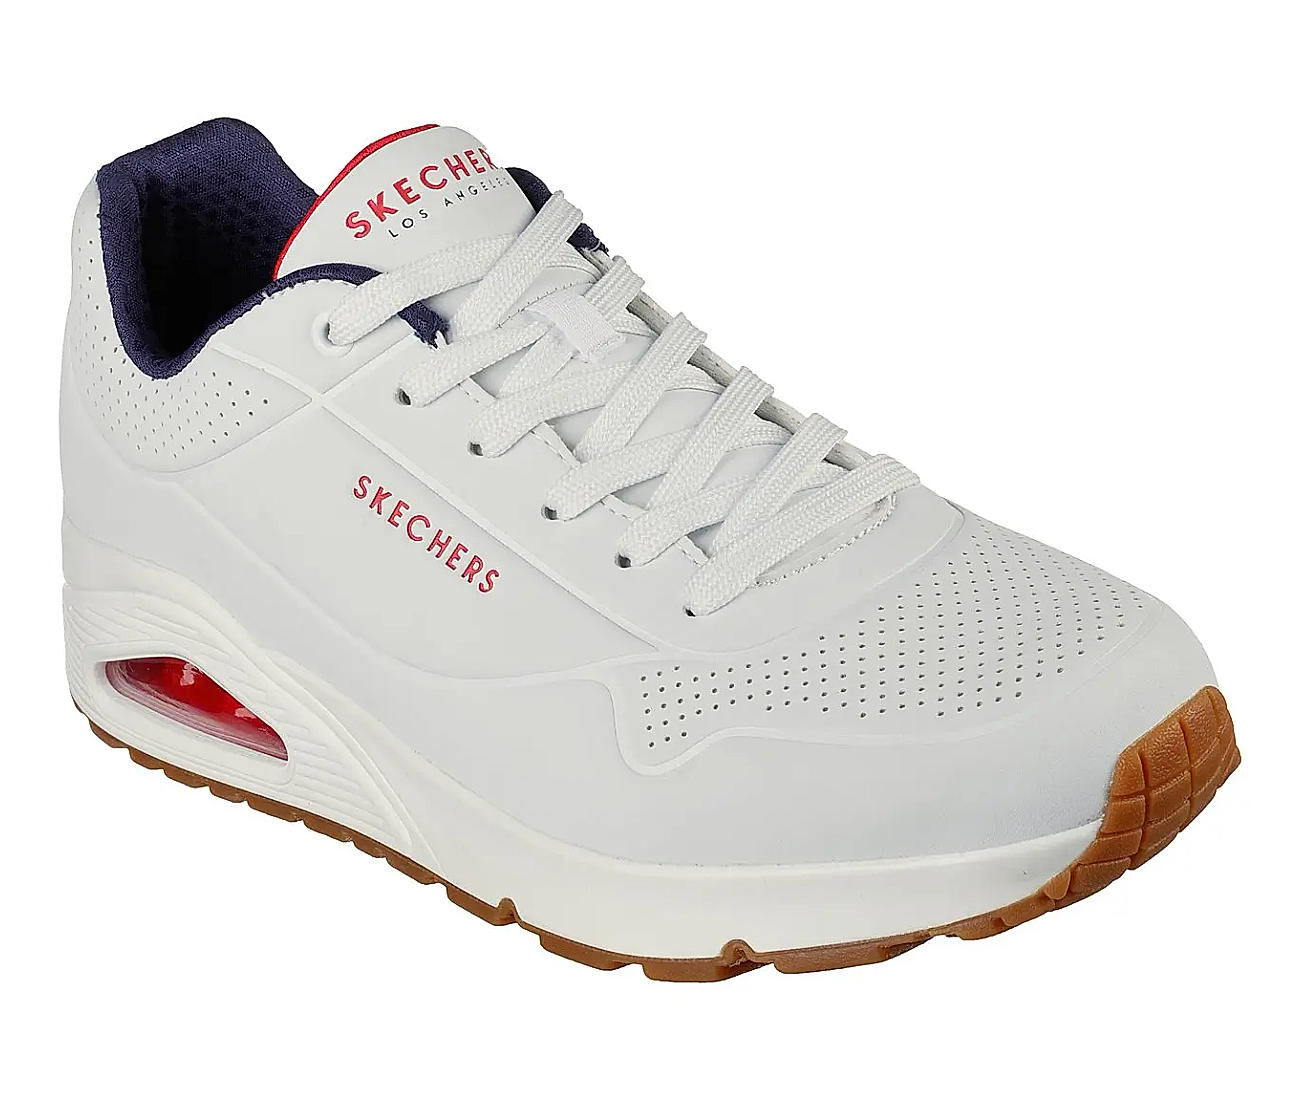 Skechers® Summits Men's Athletic Shoes | Mens athletic shoes, Skechers,  Athletic shoes